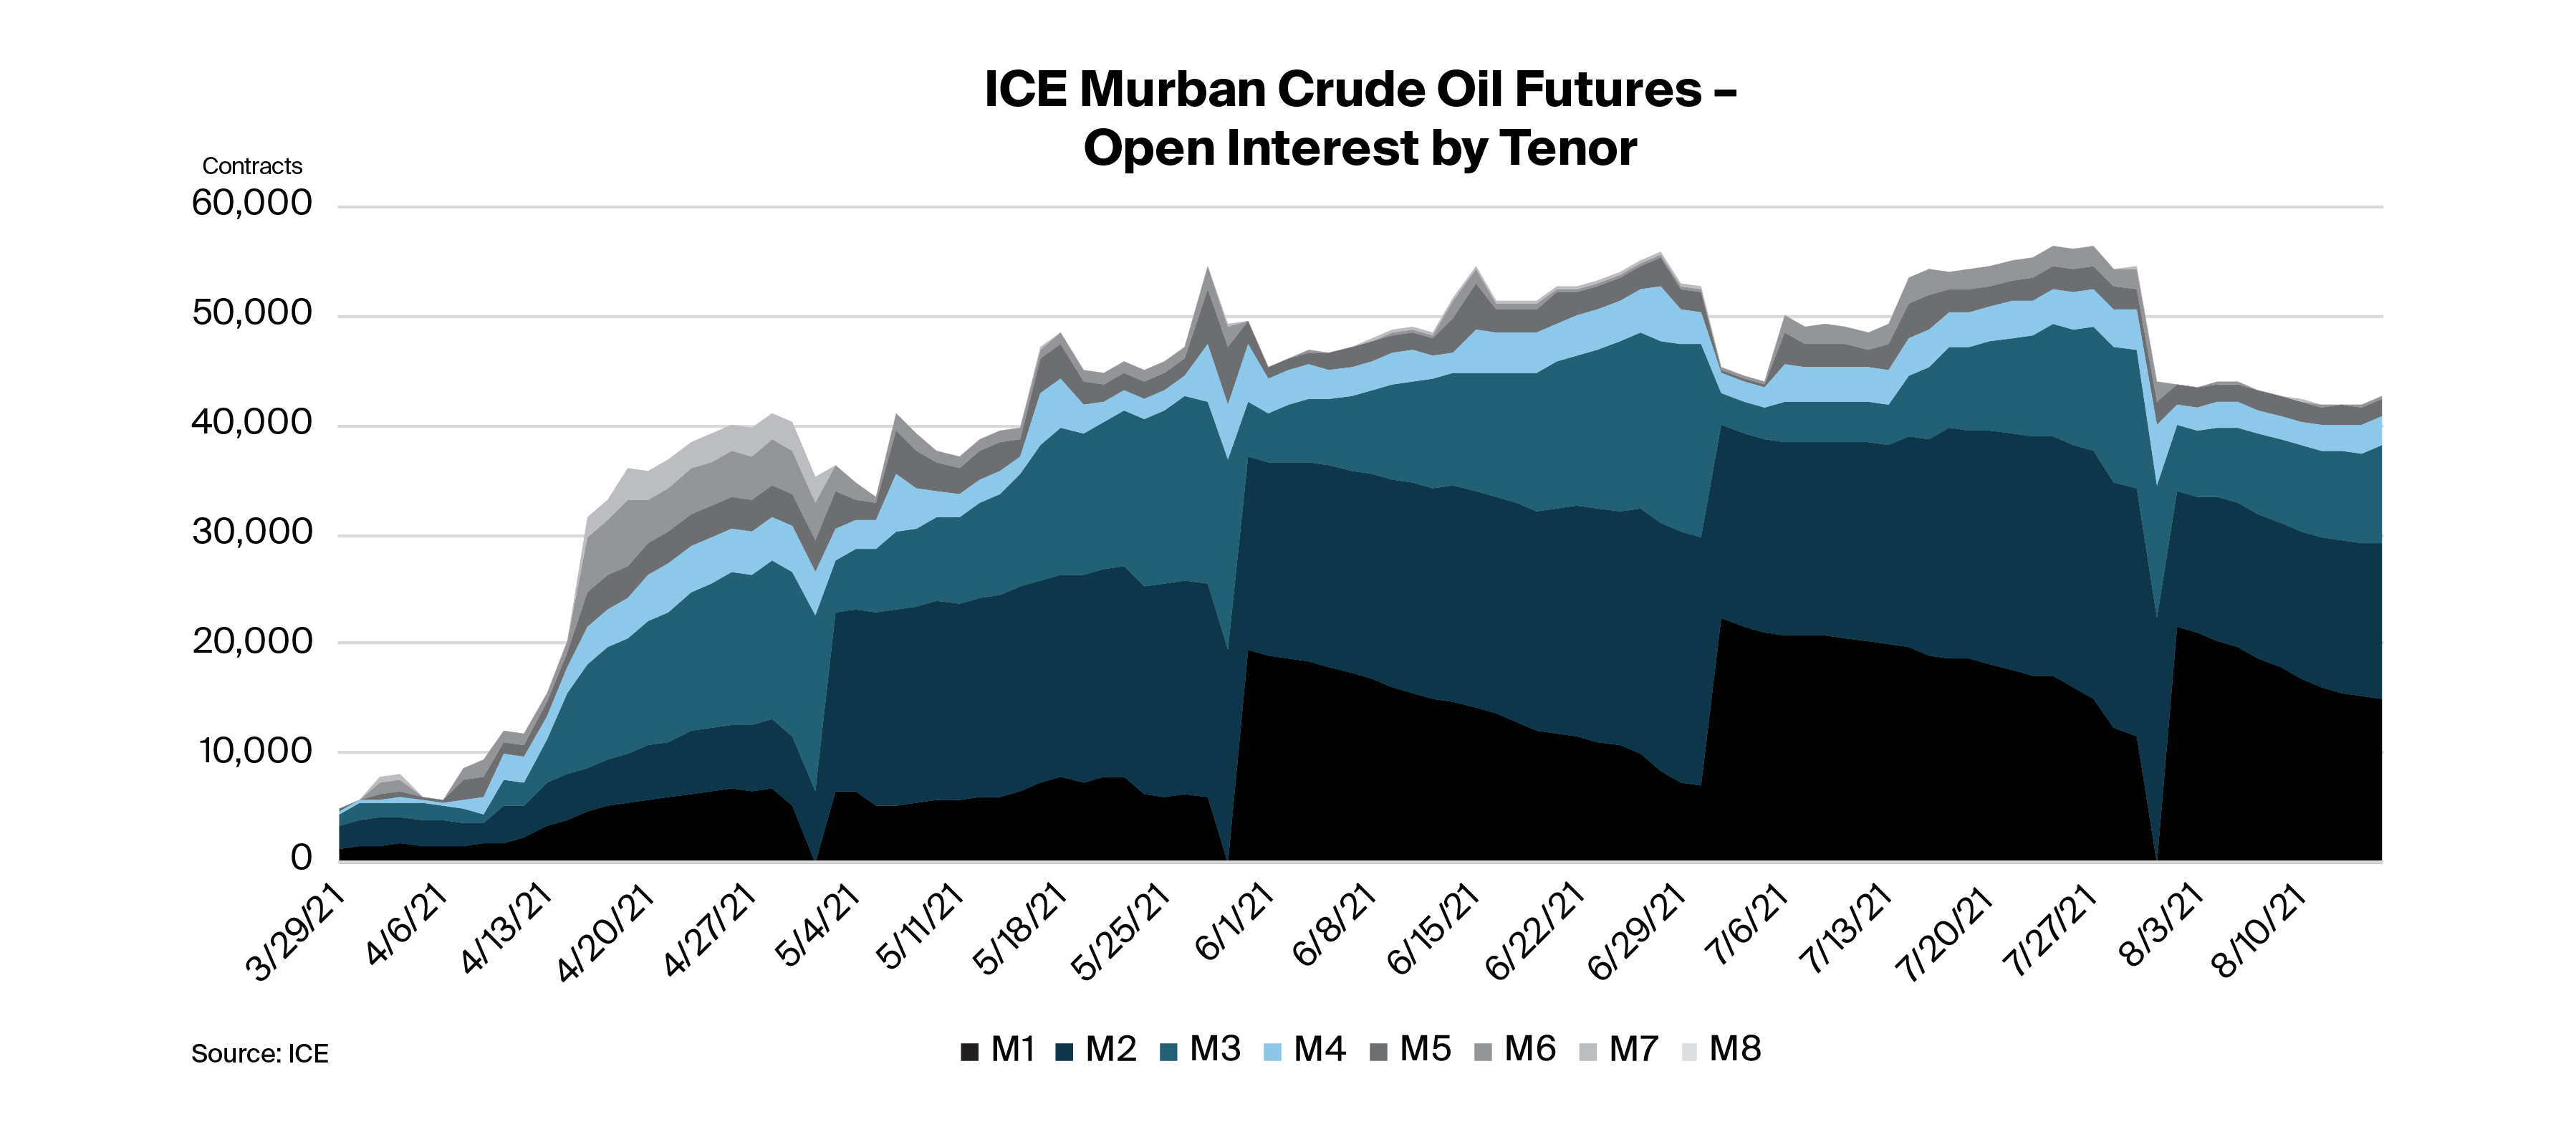 ICE Murban Crude Oil Futures - Open Interest by Tenor